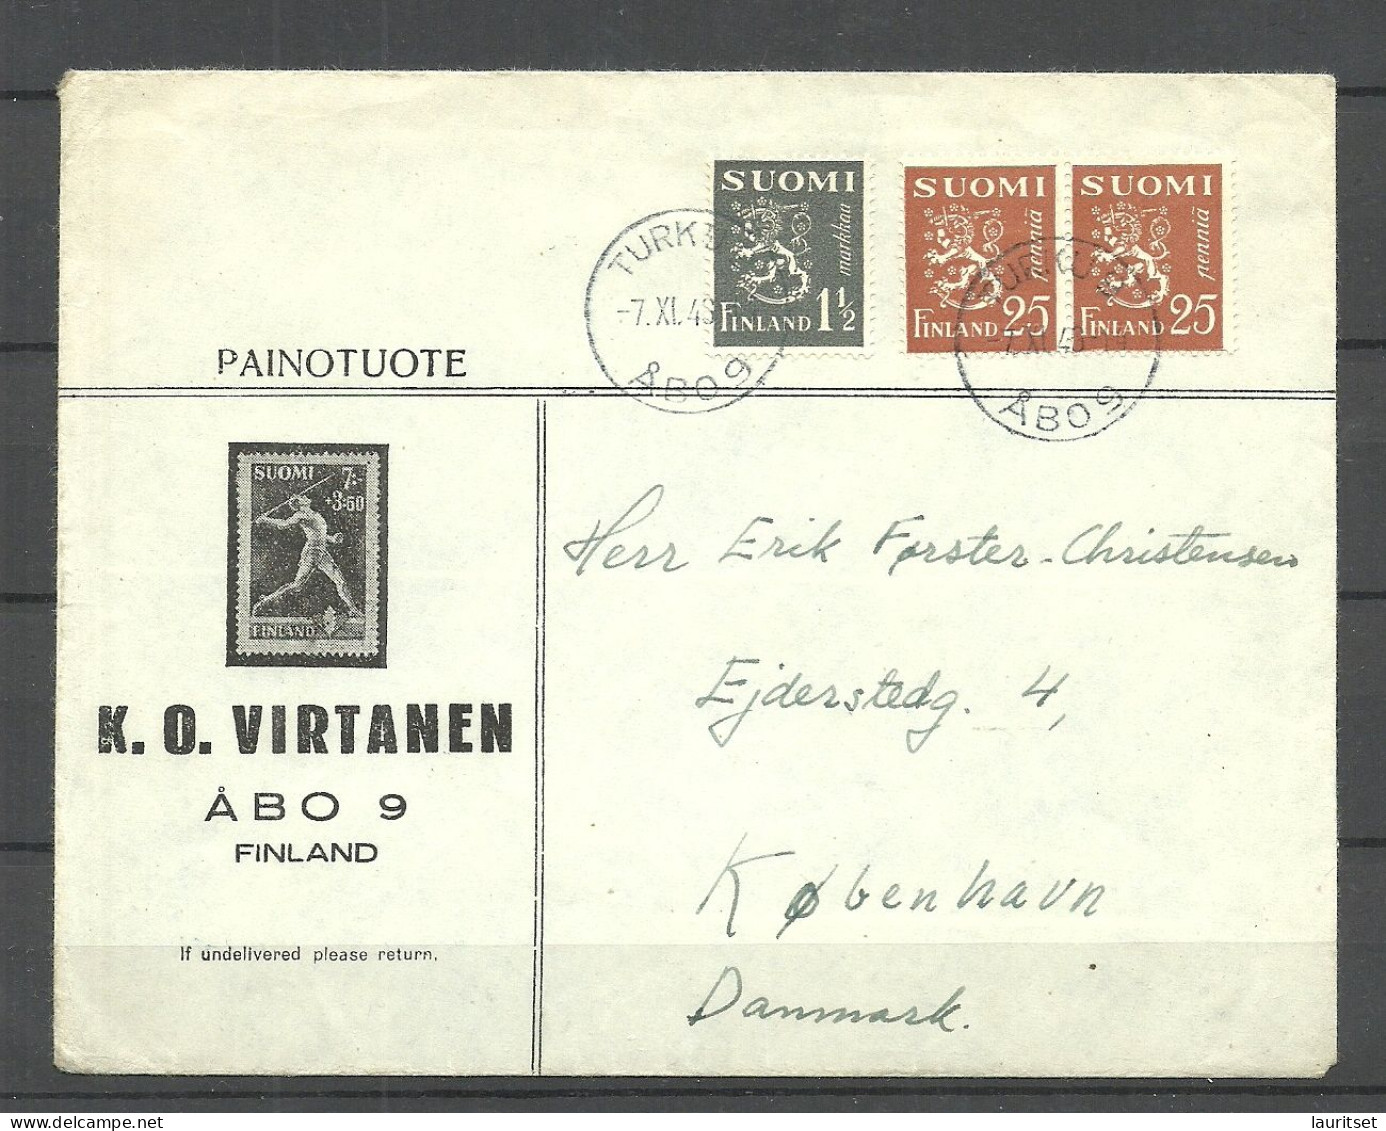 FINLAND FINNLAND Suomi 1948 O Turku 9 Commercial Cover Printed Matter To Denmark - Briefe U. Dokumente